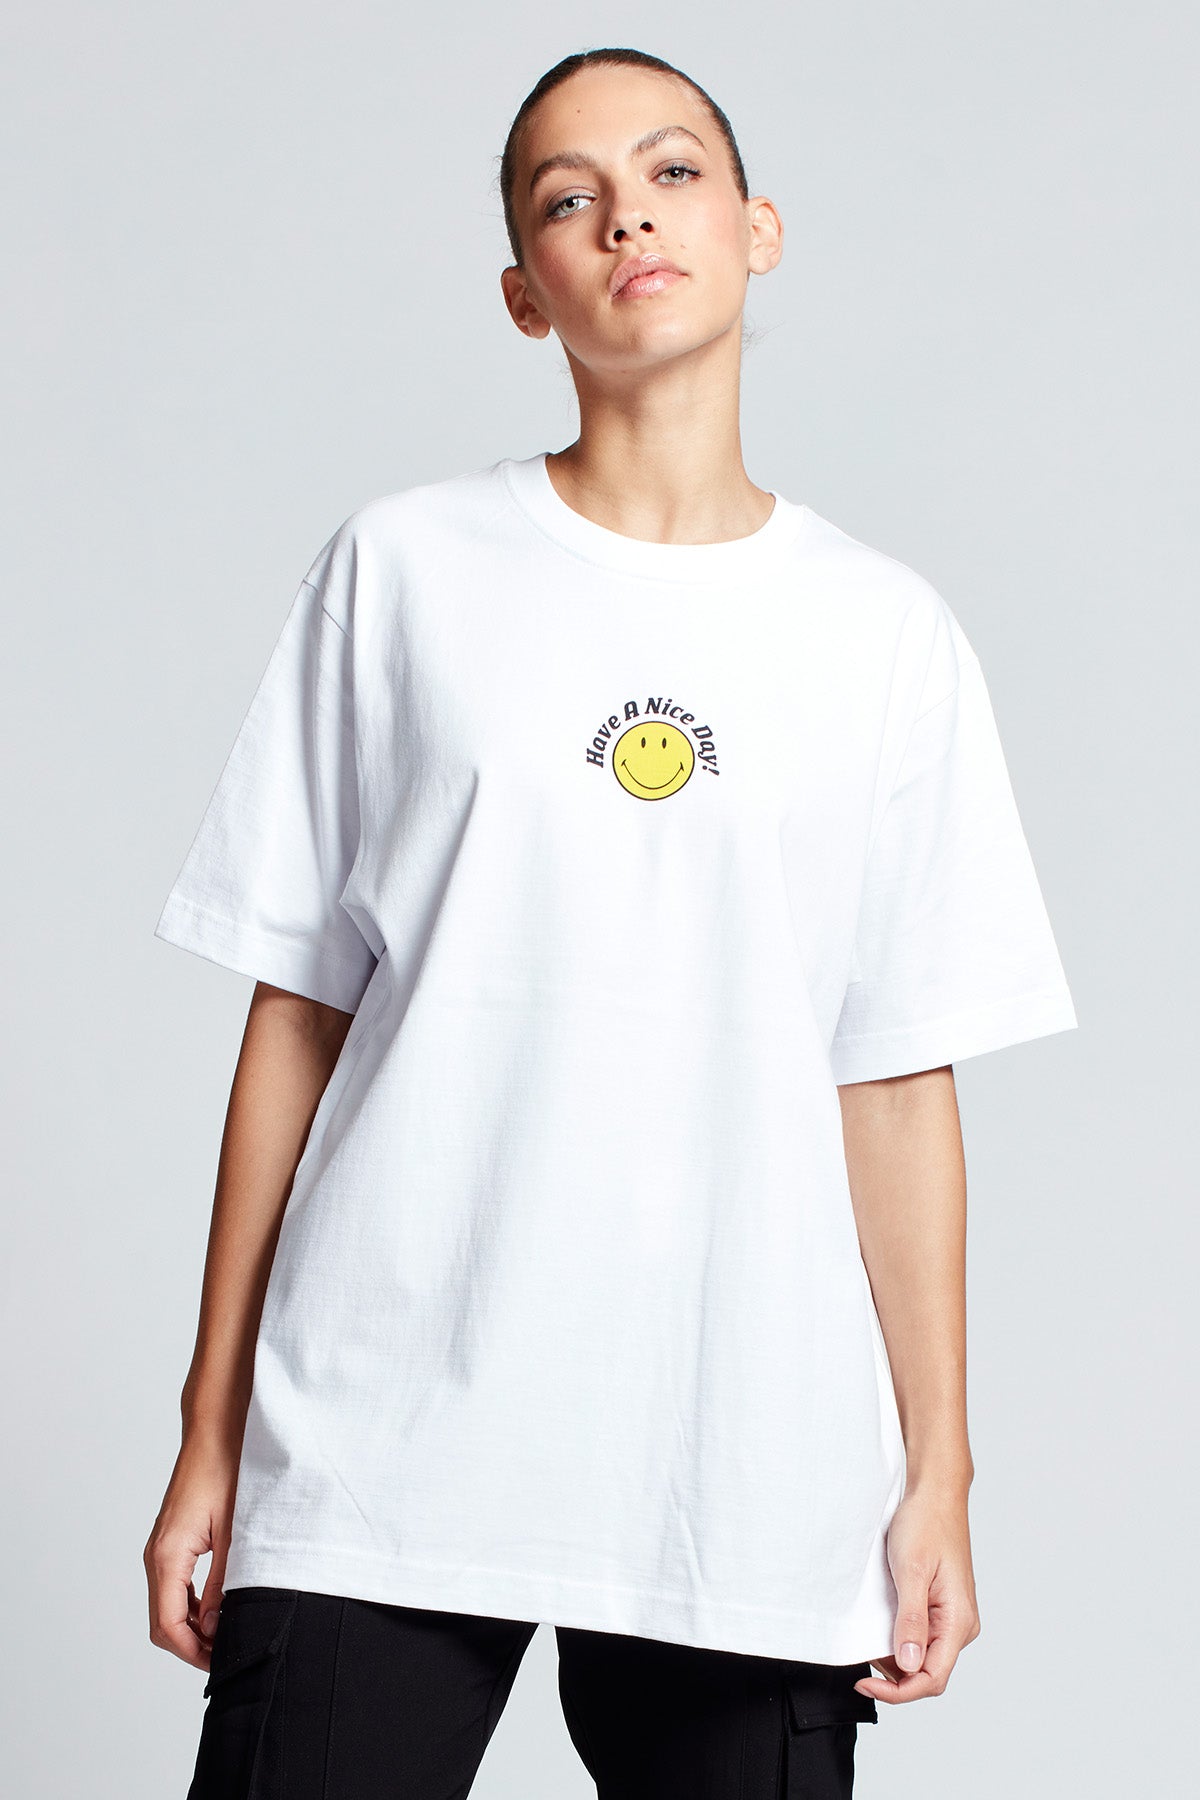 Smiley Originals® Original Raver T-shirt in White